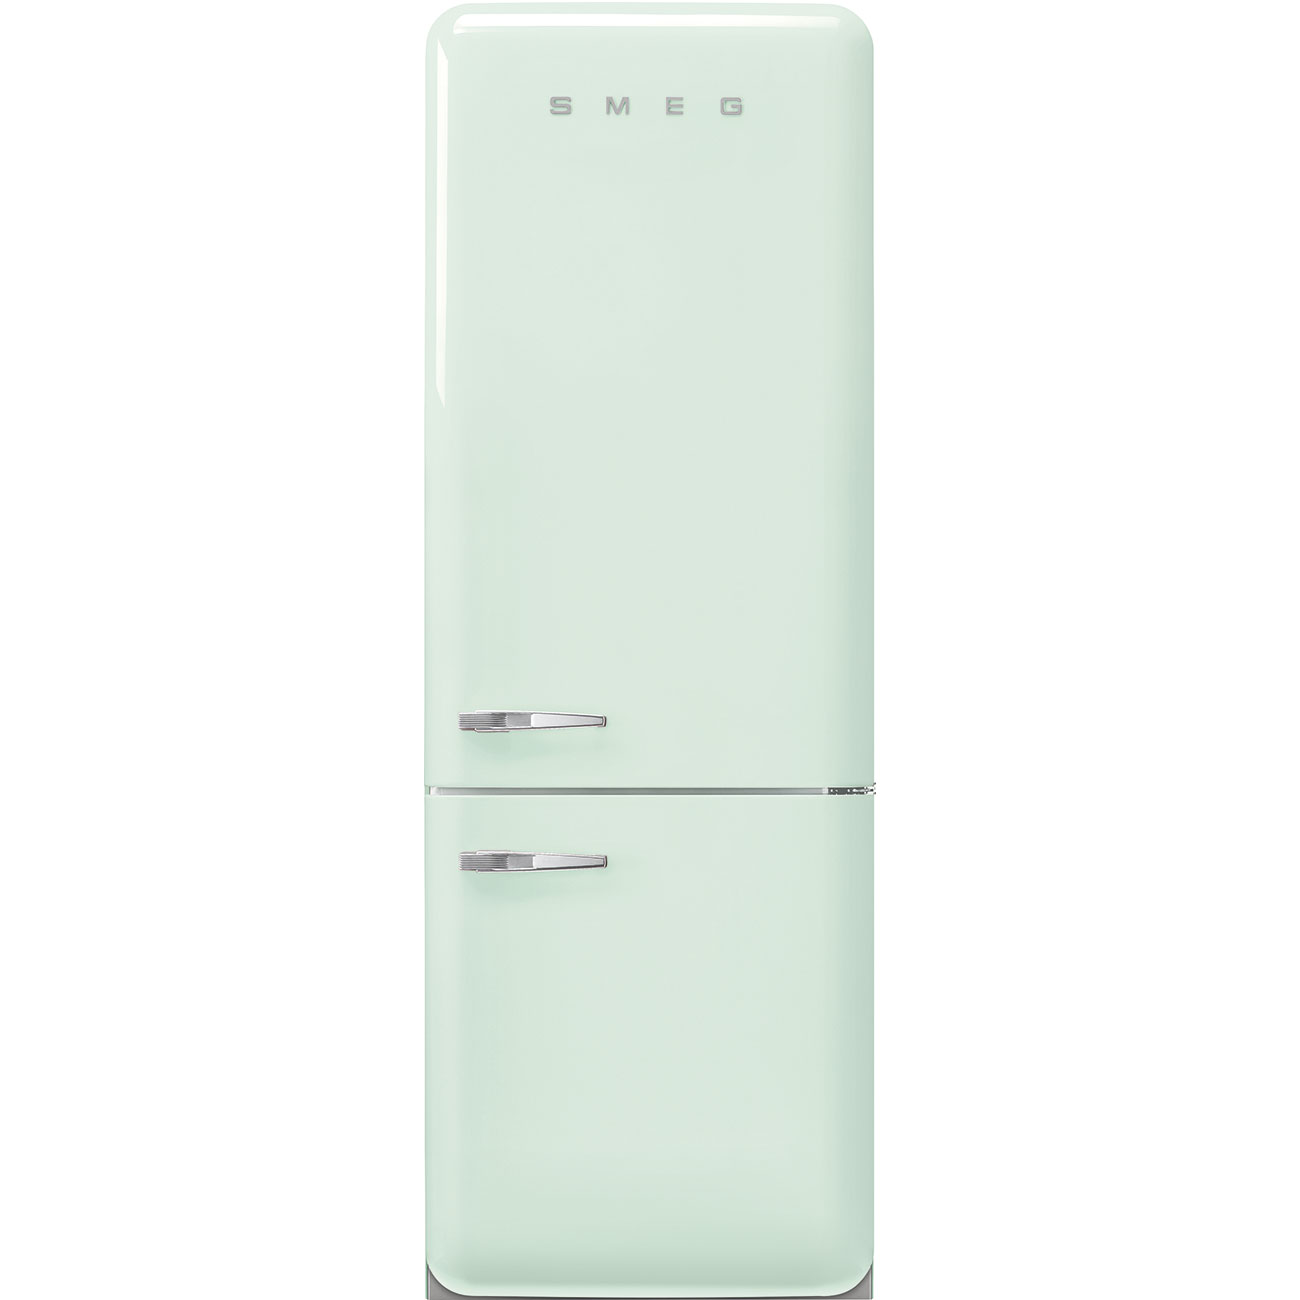 Pastel green refrigerator - Smeg_1